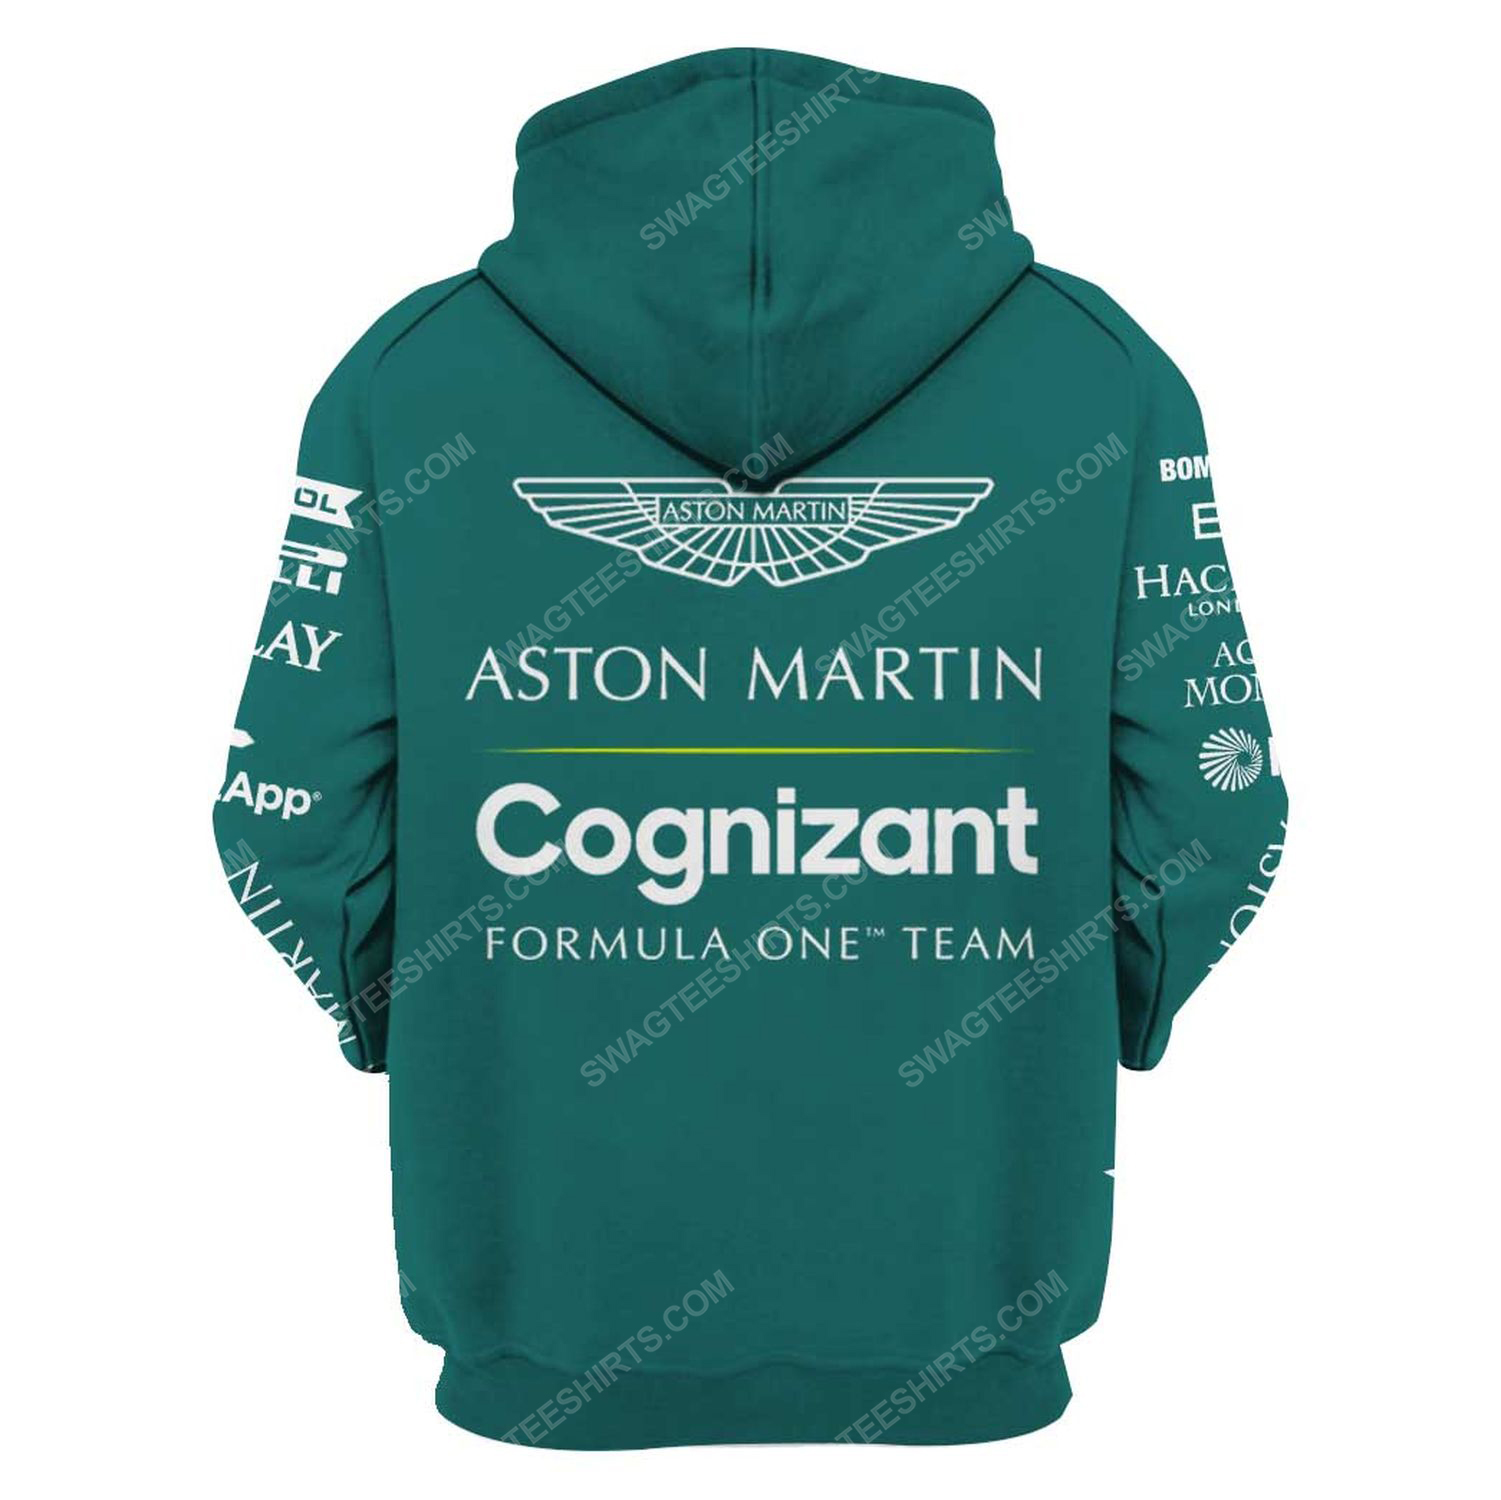 Cognizant aston martin racing team motorsport full printing hoodie - back